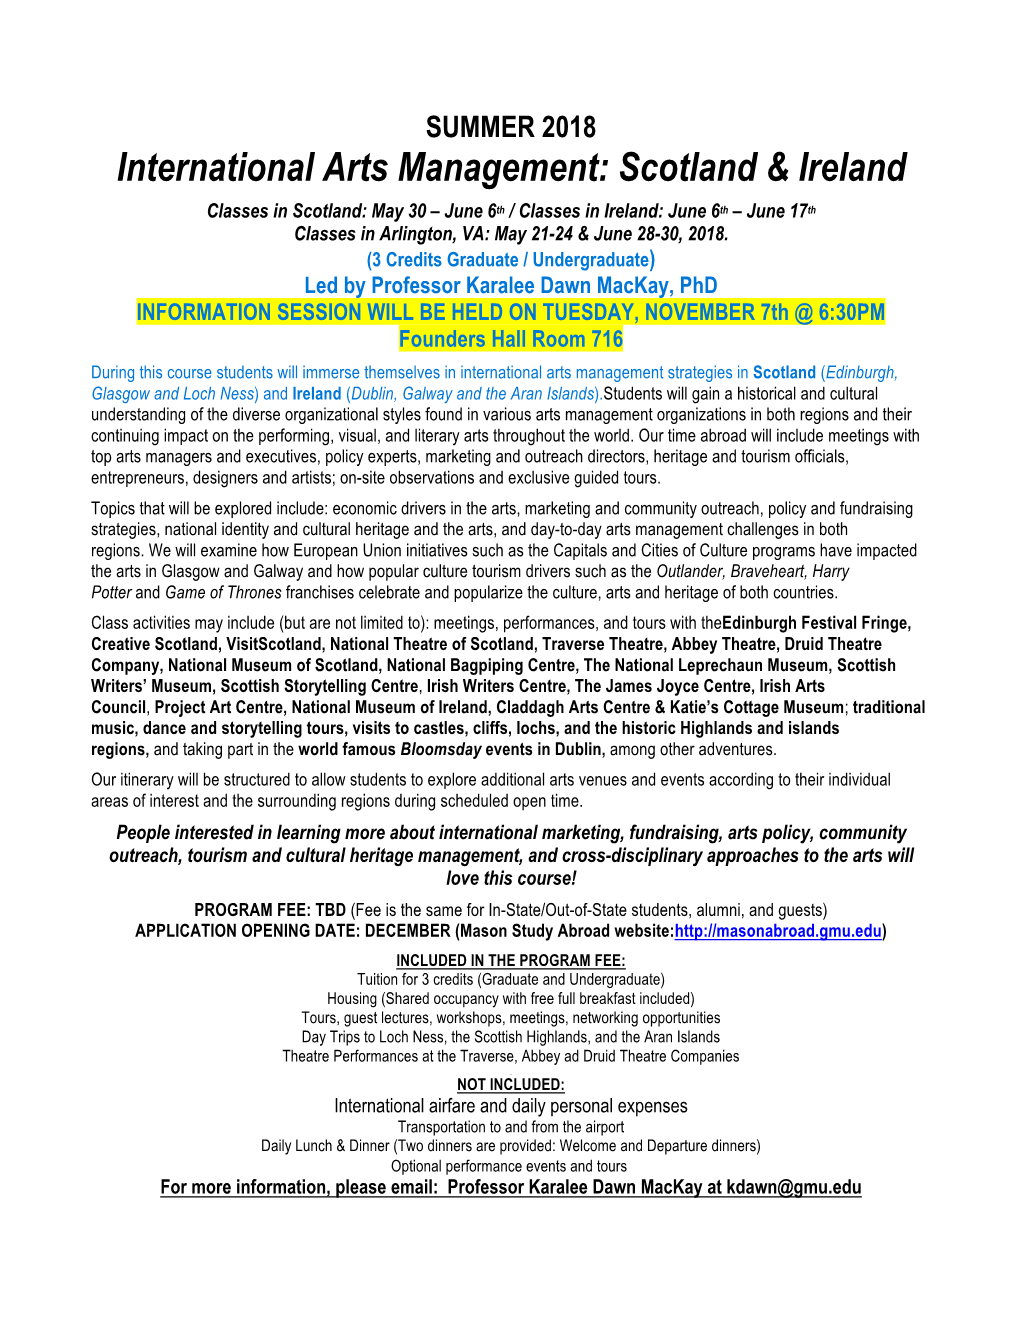 International Arts Management: Scotland & Ireland